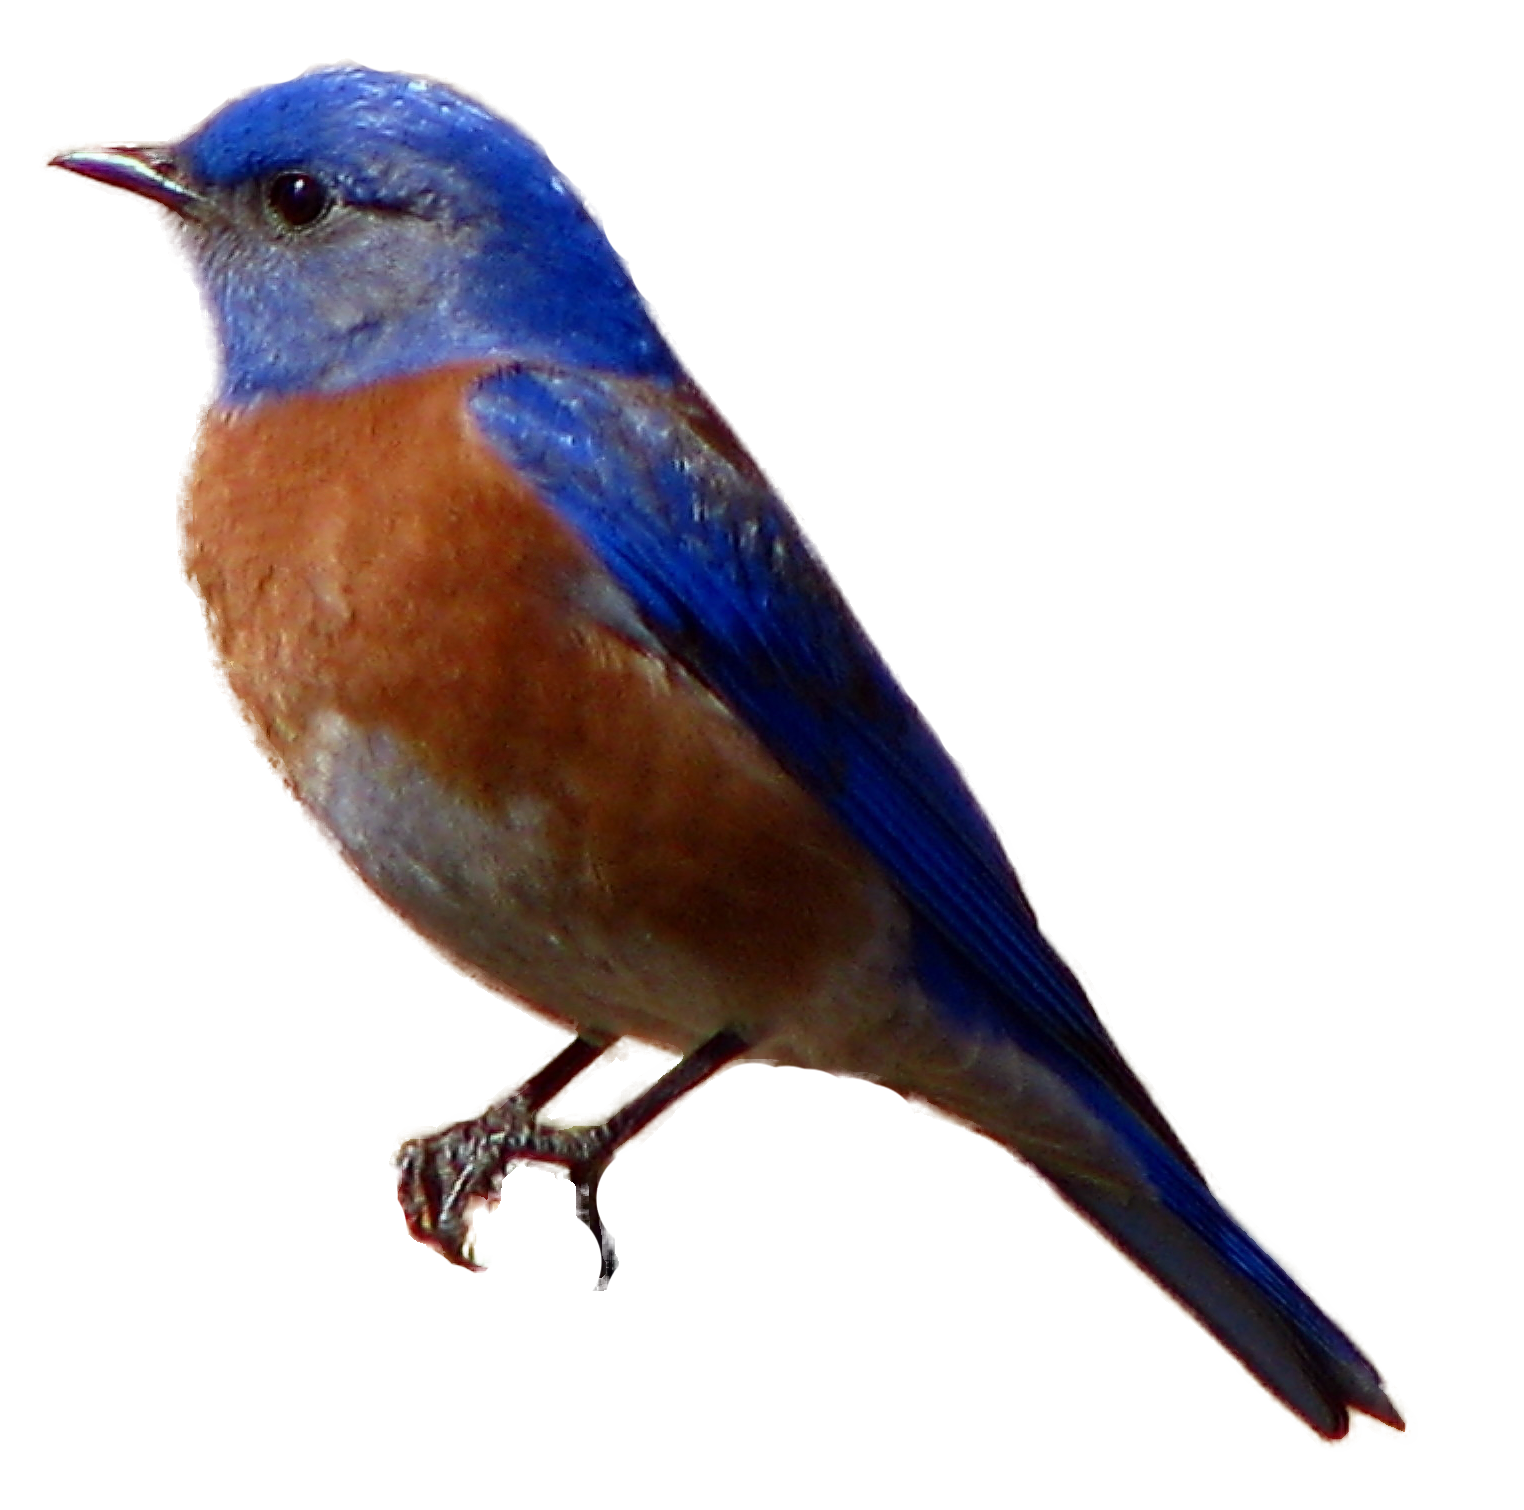 Selected Bird Image 